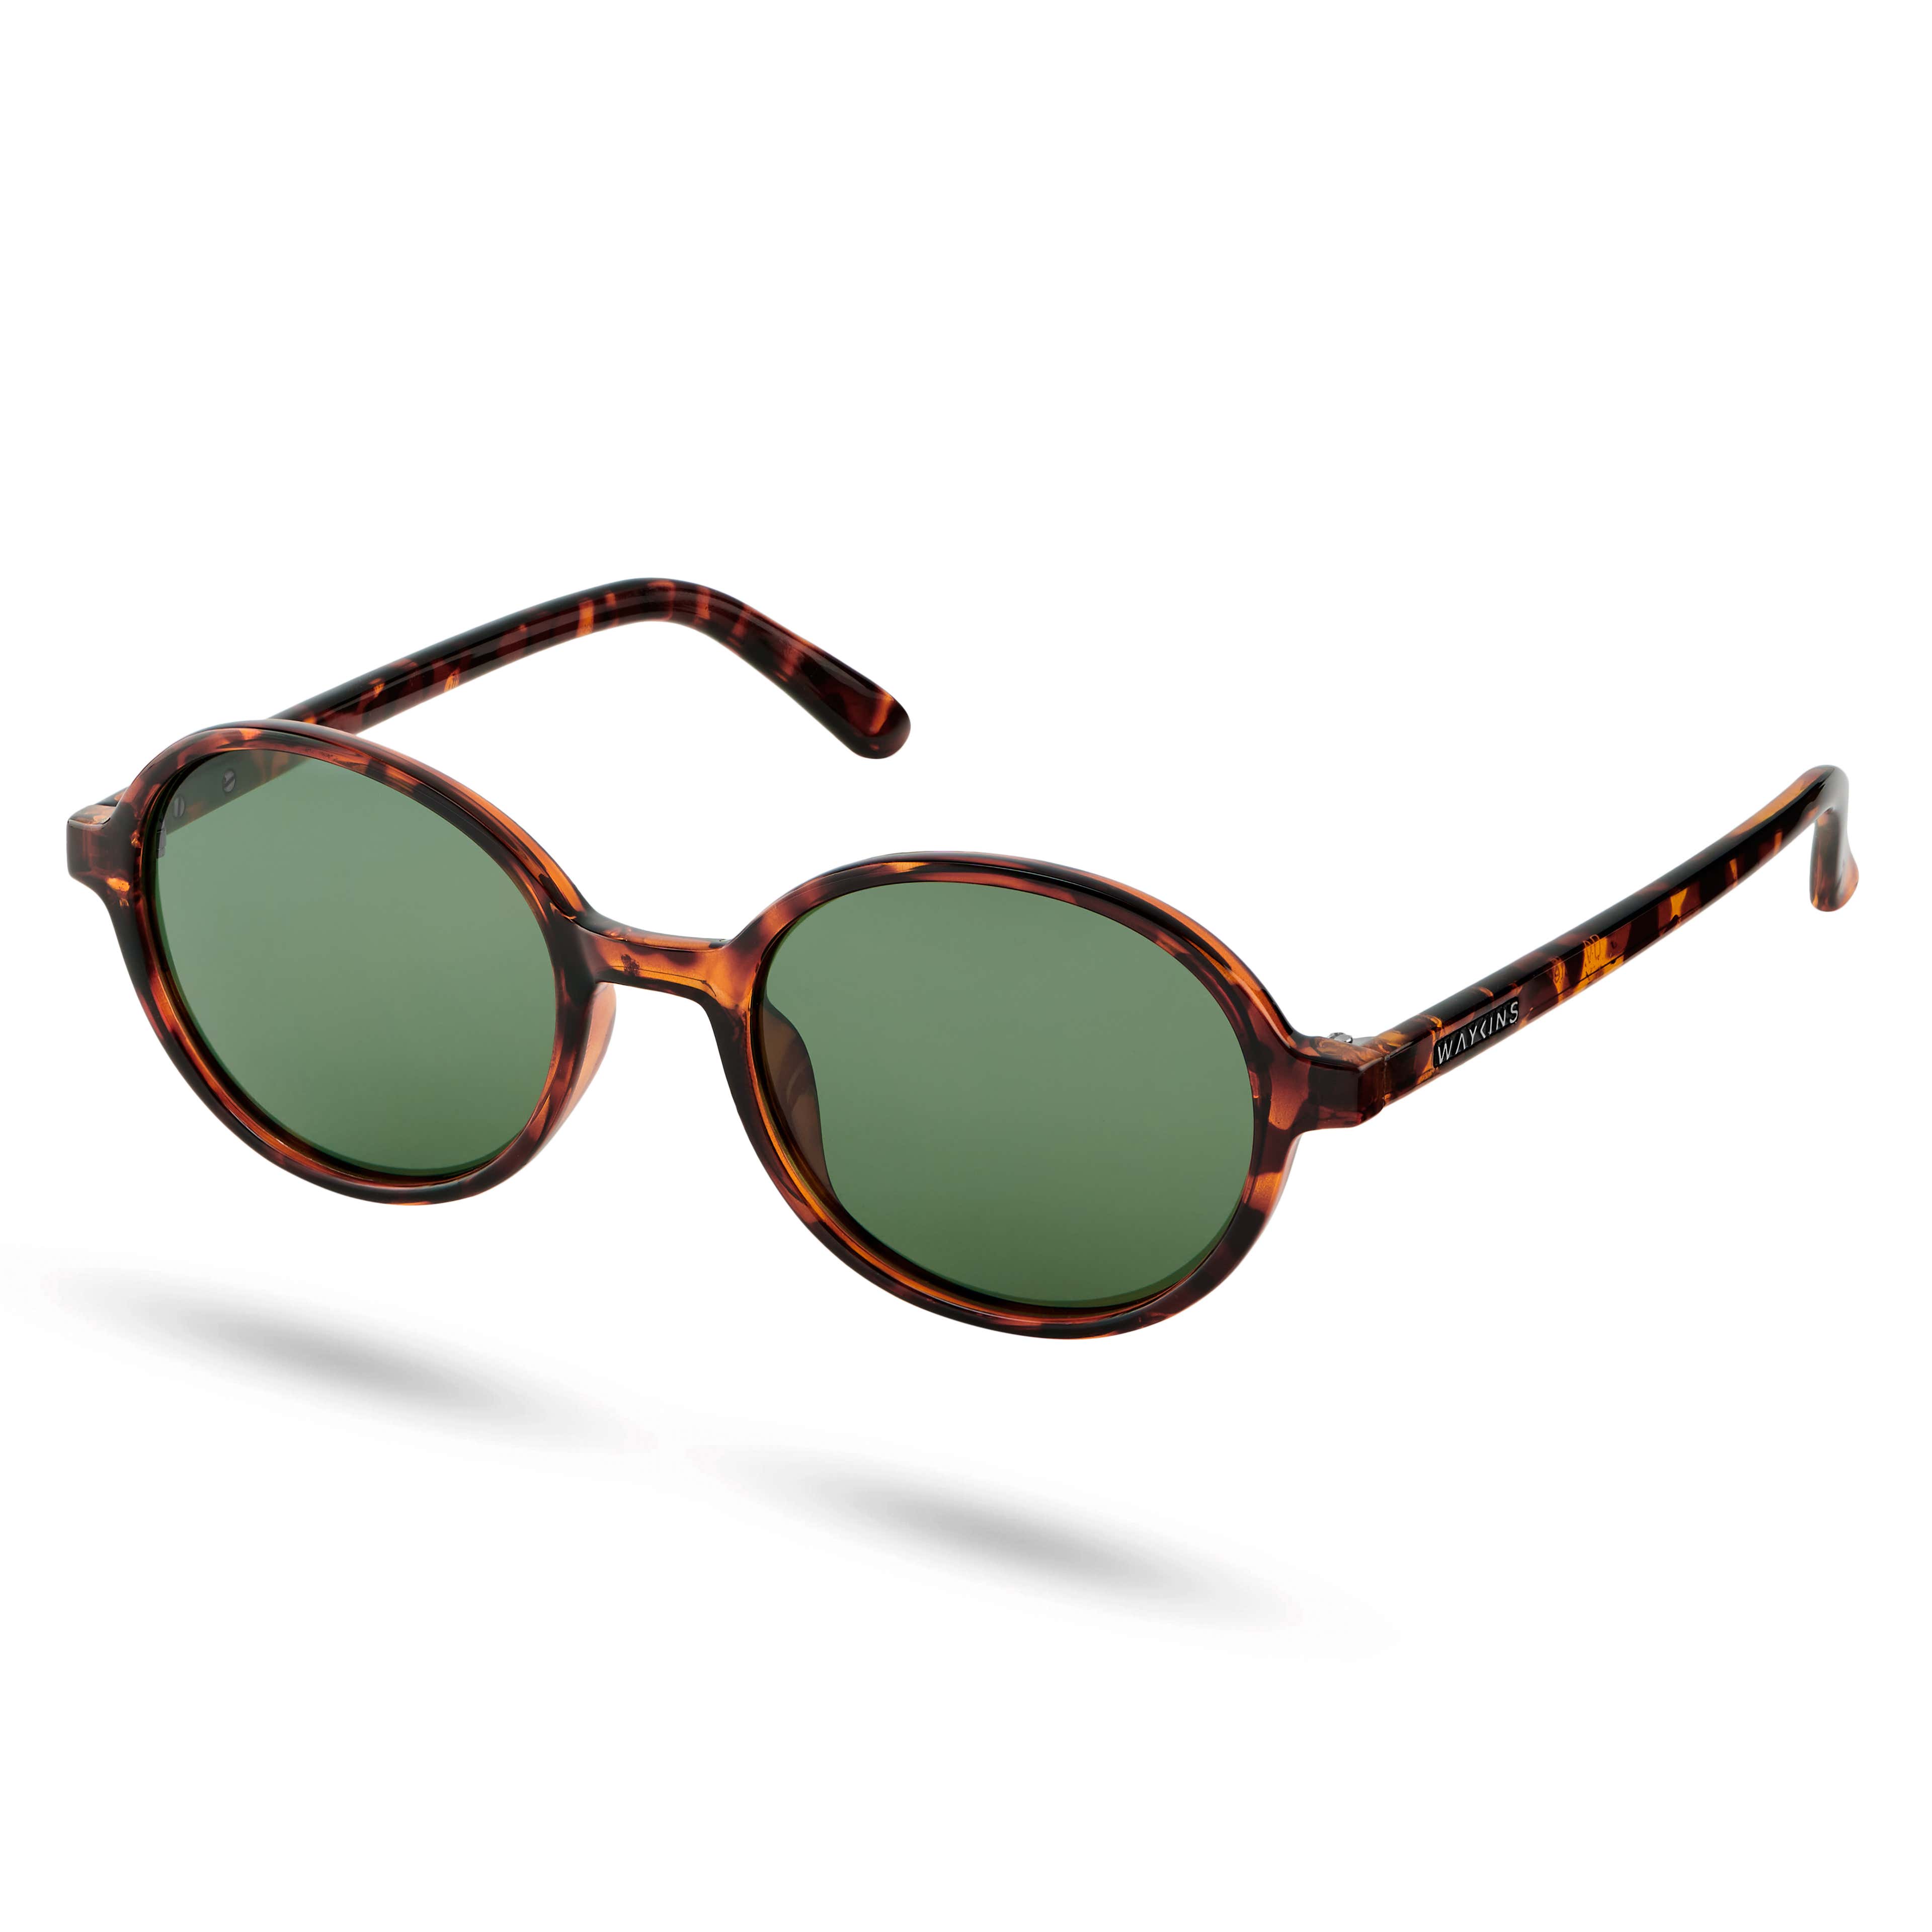 Walford Thea Tortoise Shell & Green Polarized Sunglasses